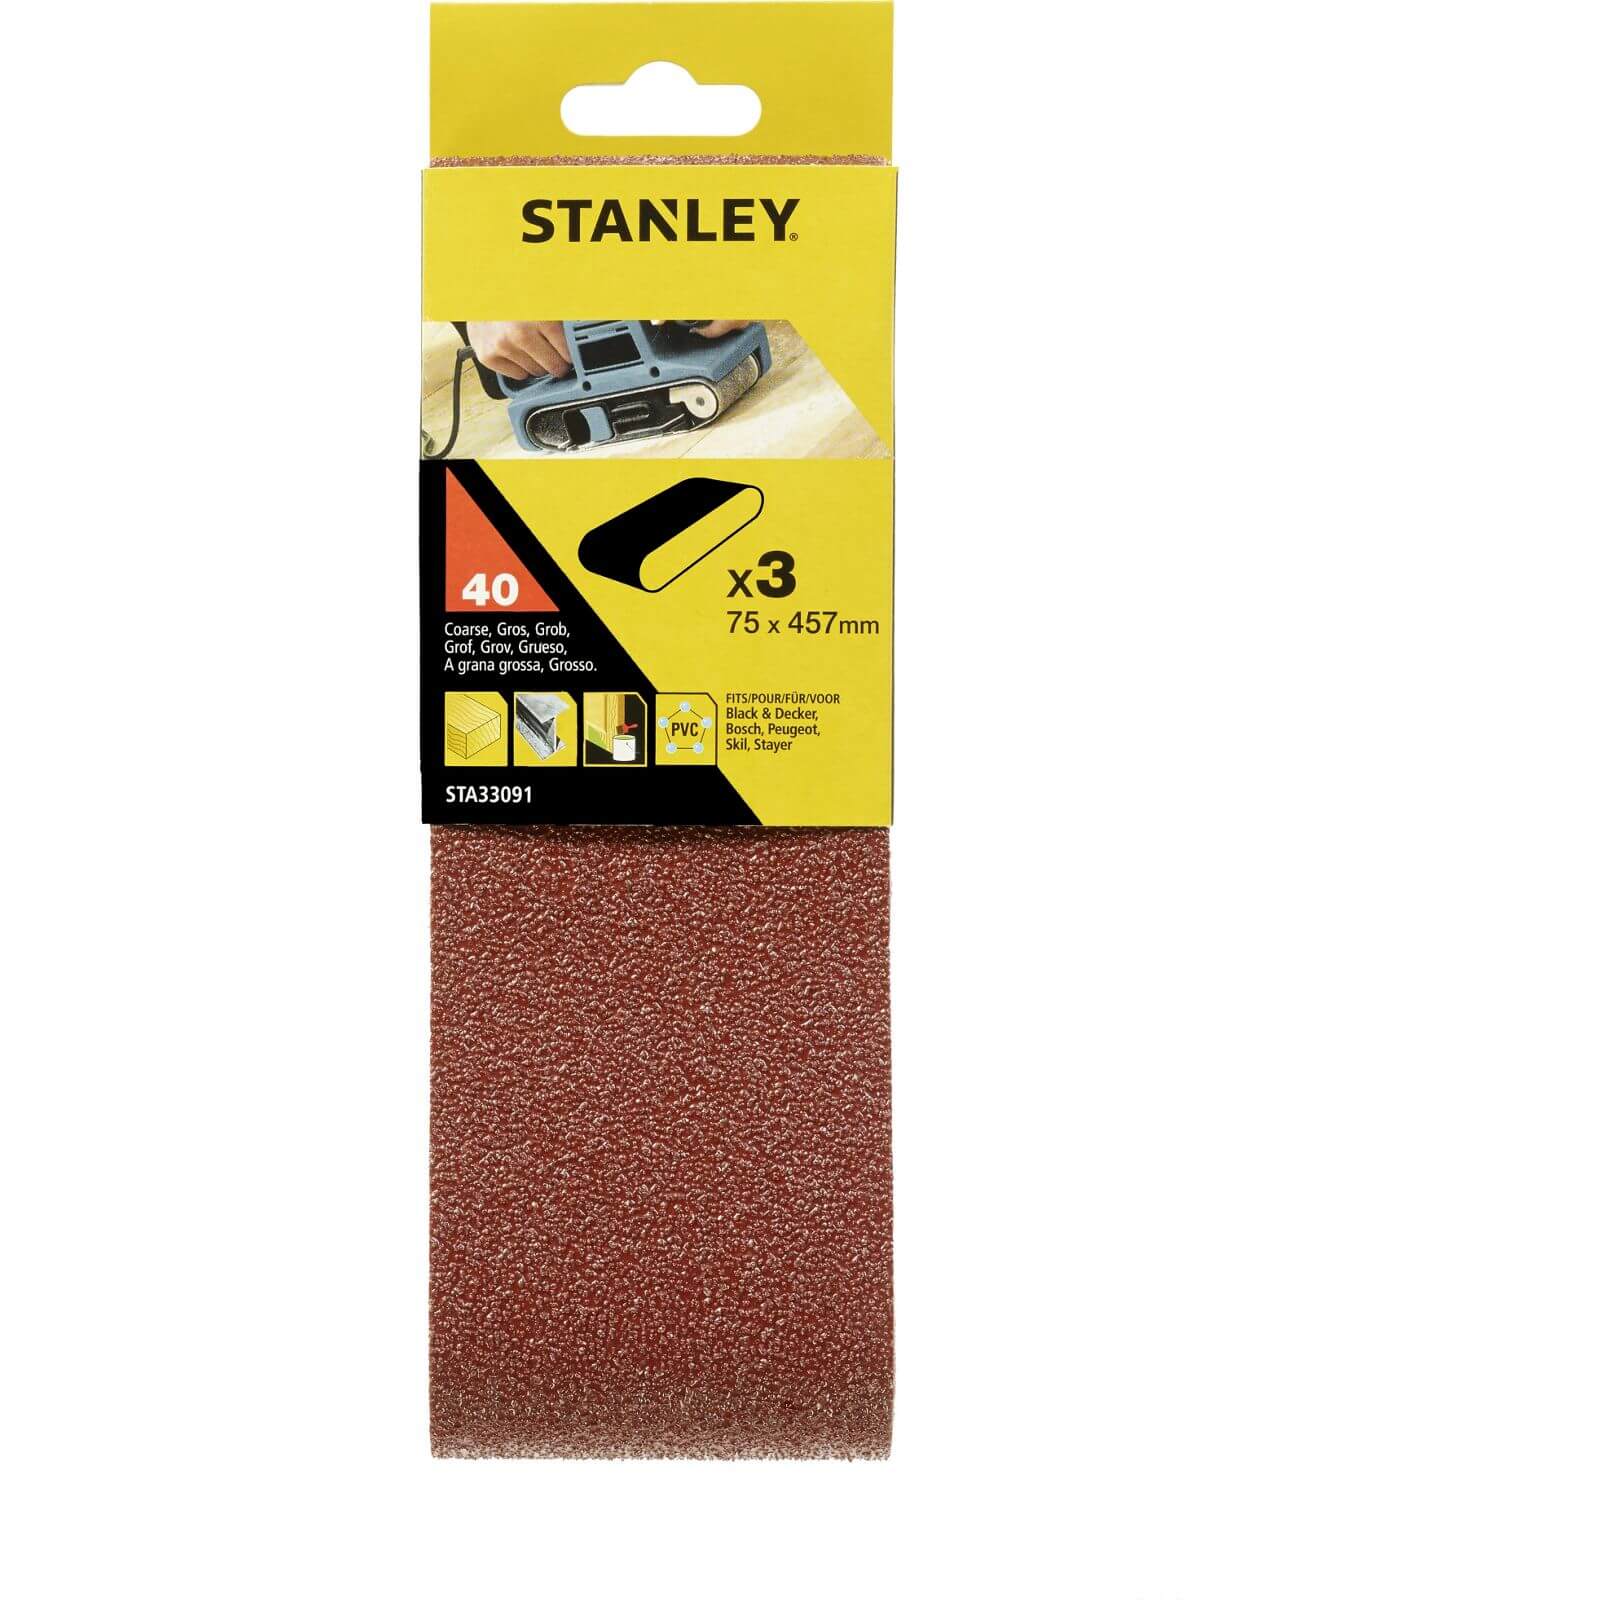 Photo of Stanley Sanding Belts 75x457 40g - Sta33091-xj